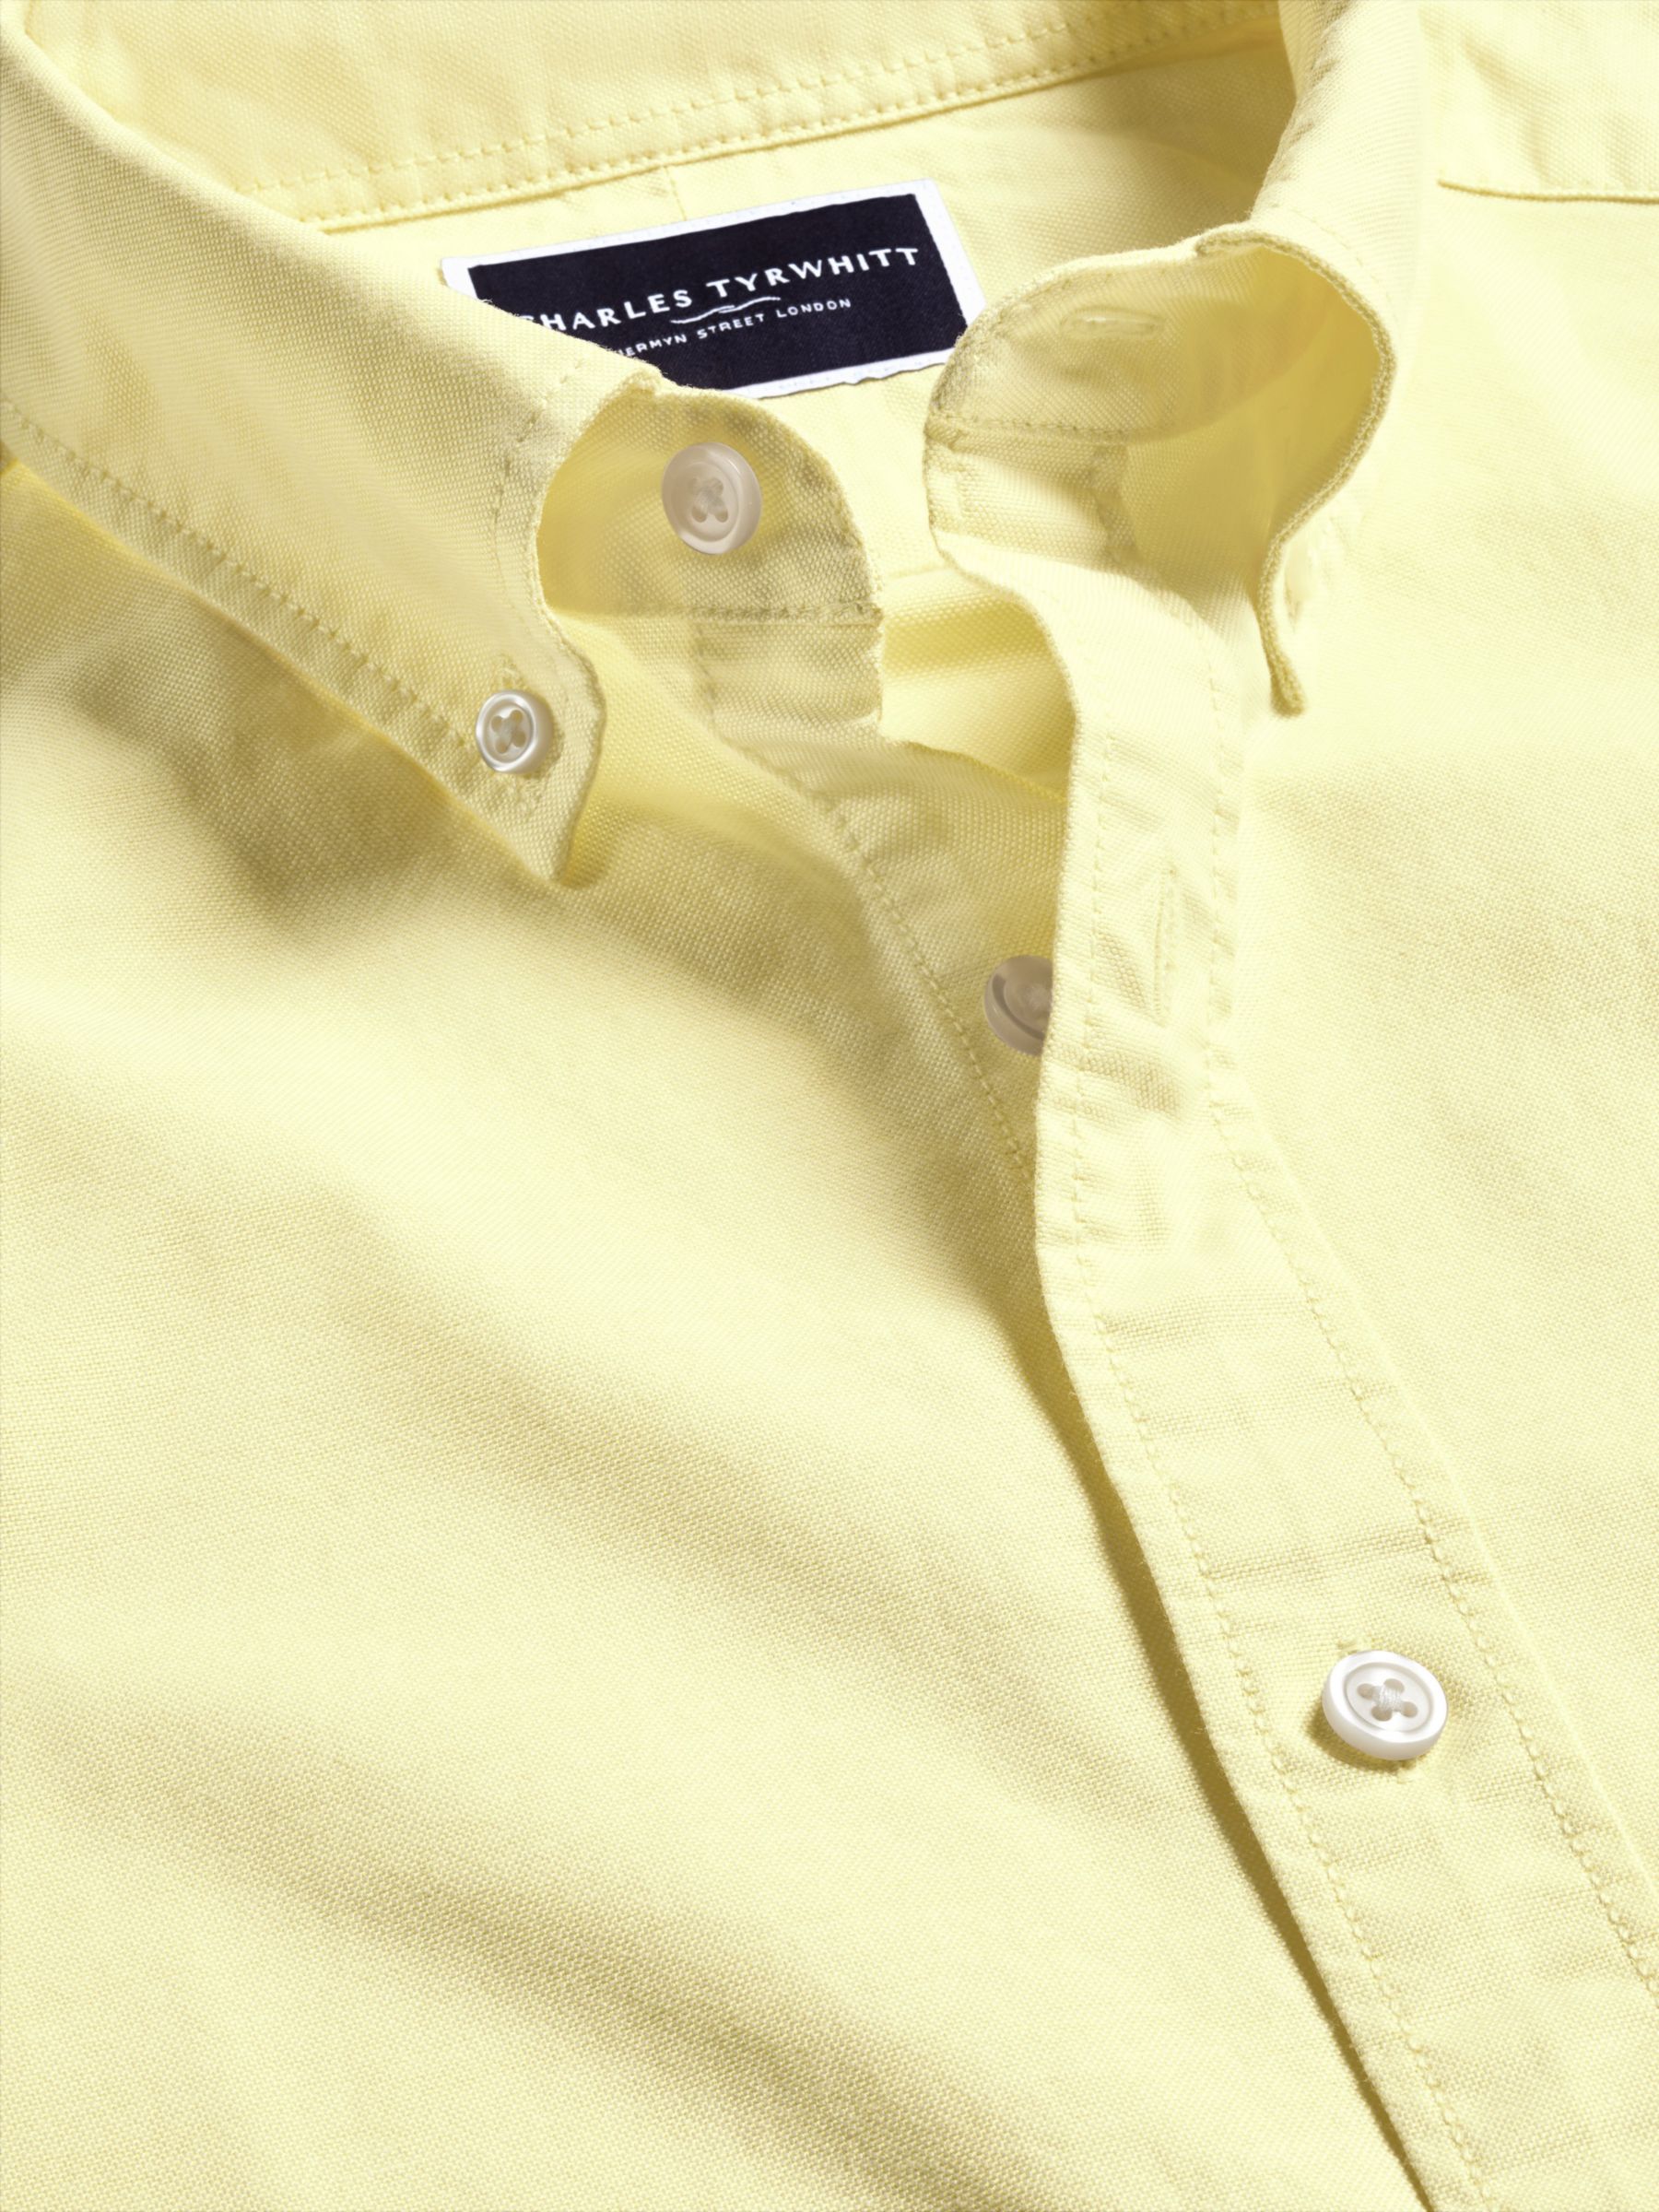 Charles Tyrwhitt Classic Fit Oxford Short Sleeve Shirt, Lemon, M